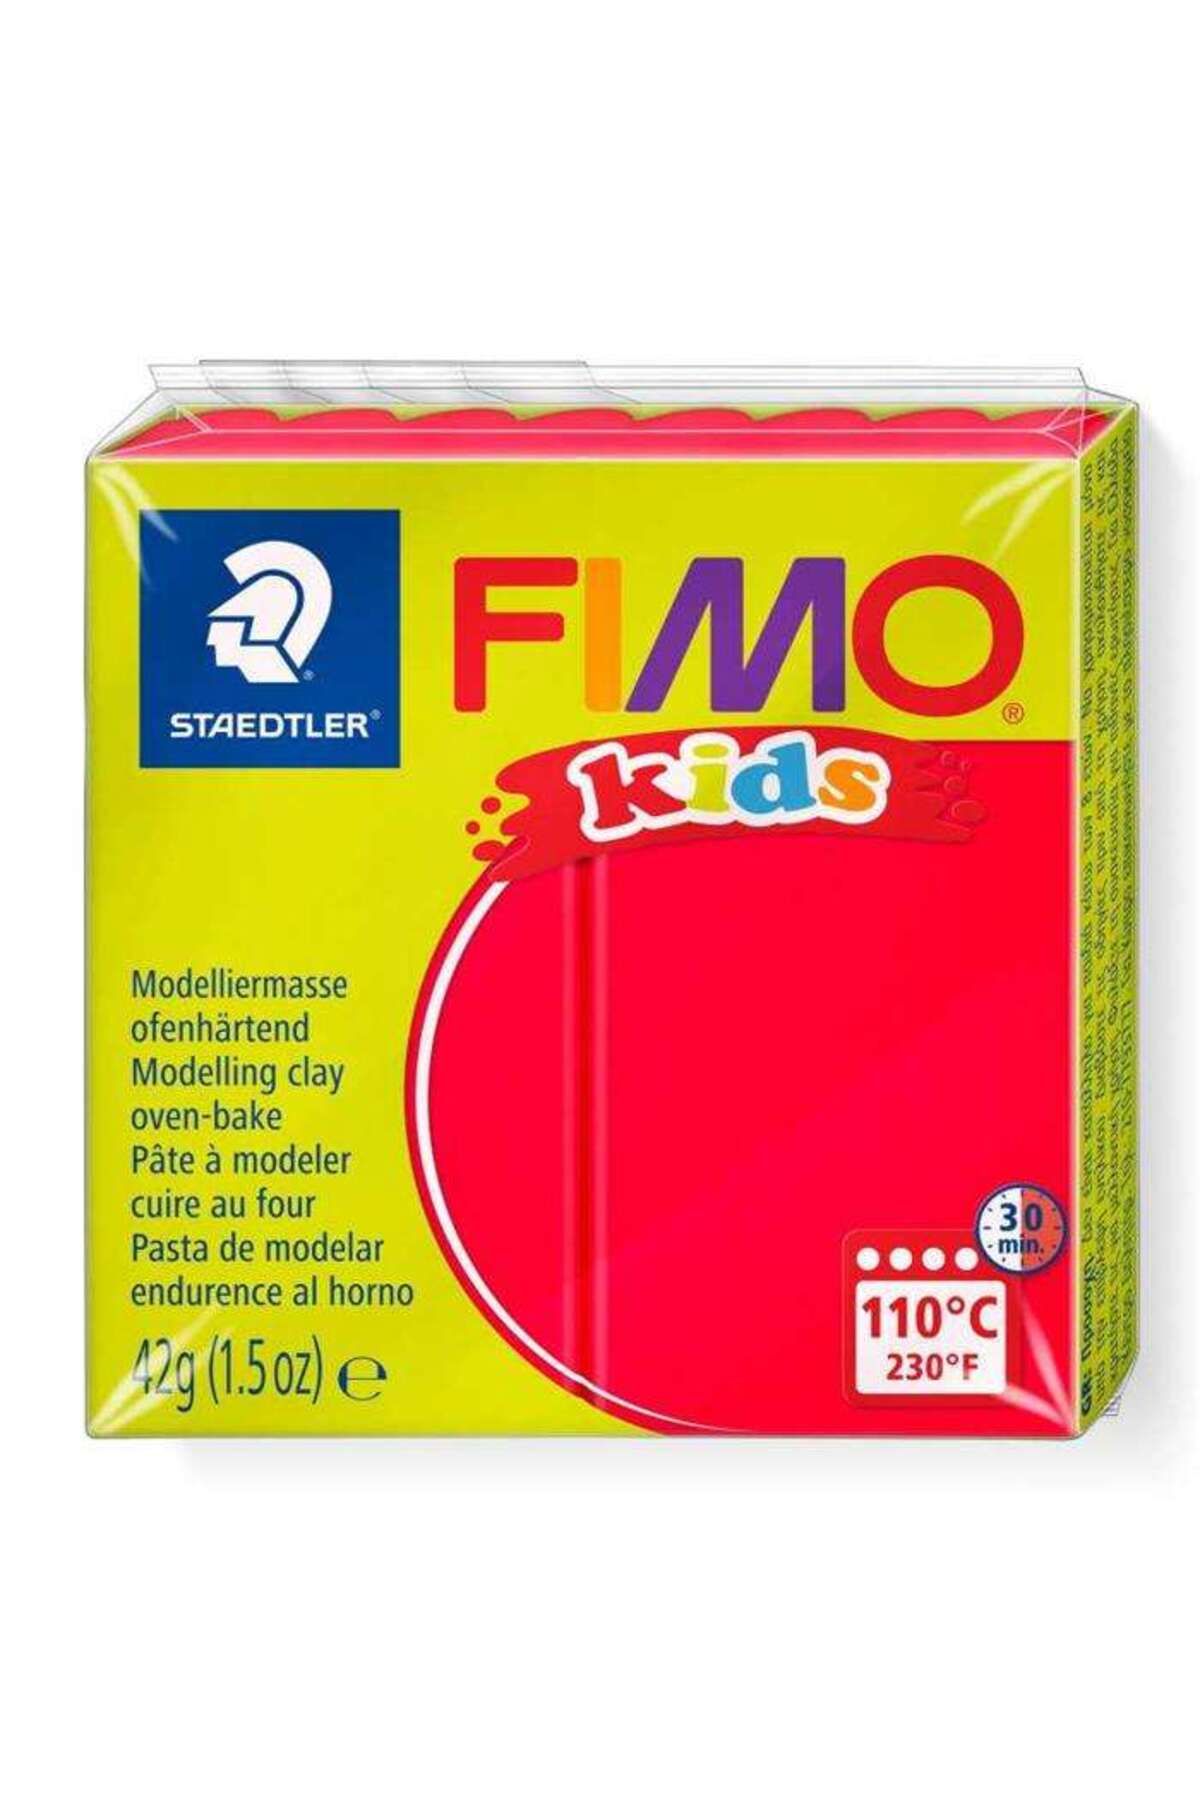 Staedtler Fimo Kids 2 Modelleme Kili 42 g Kırmızı